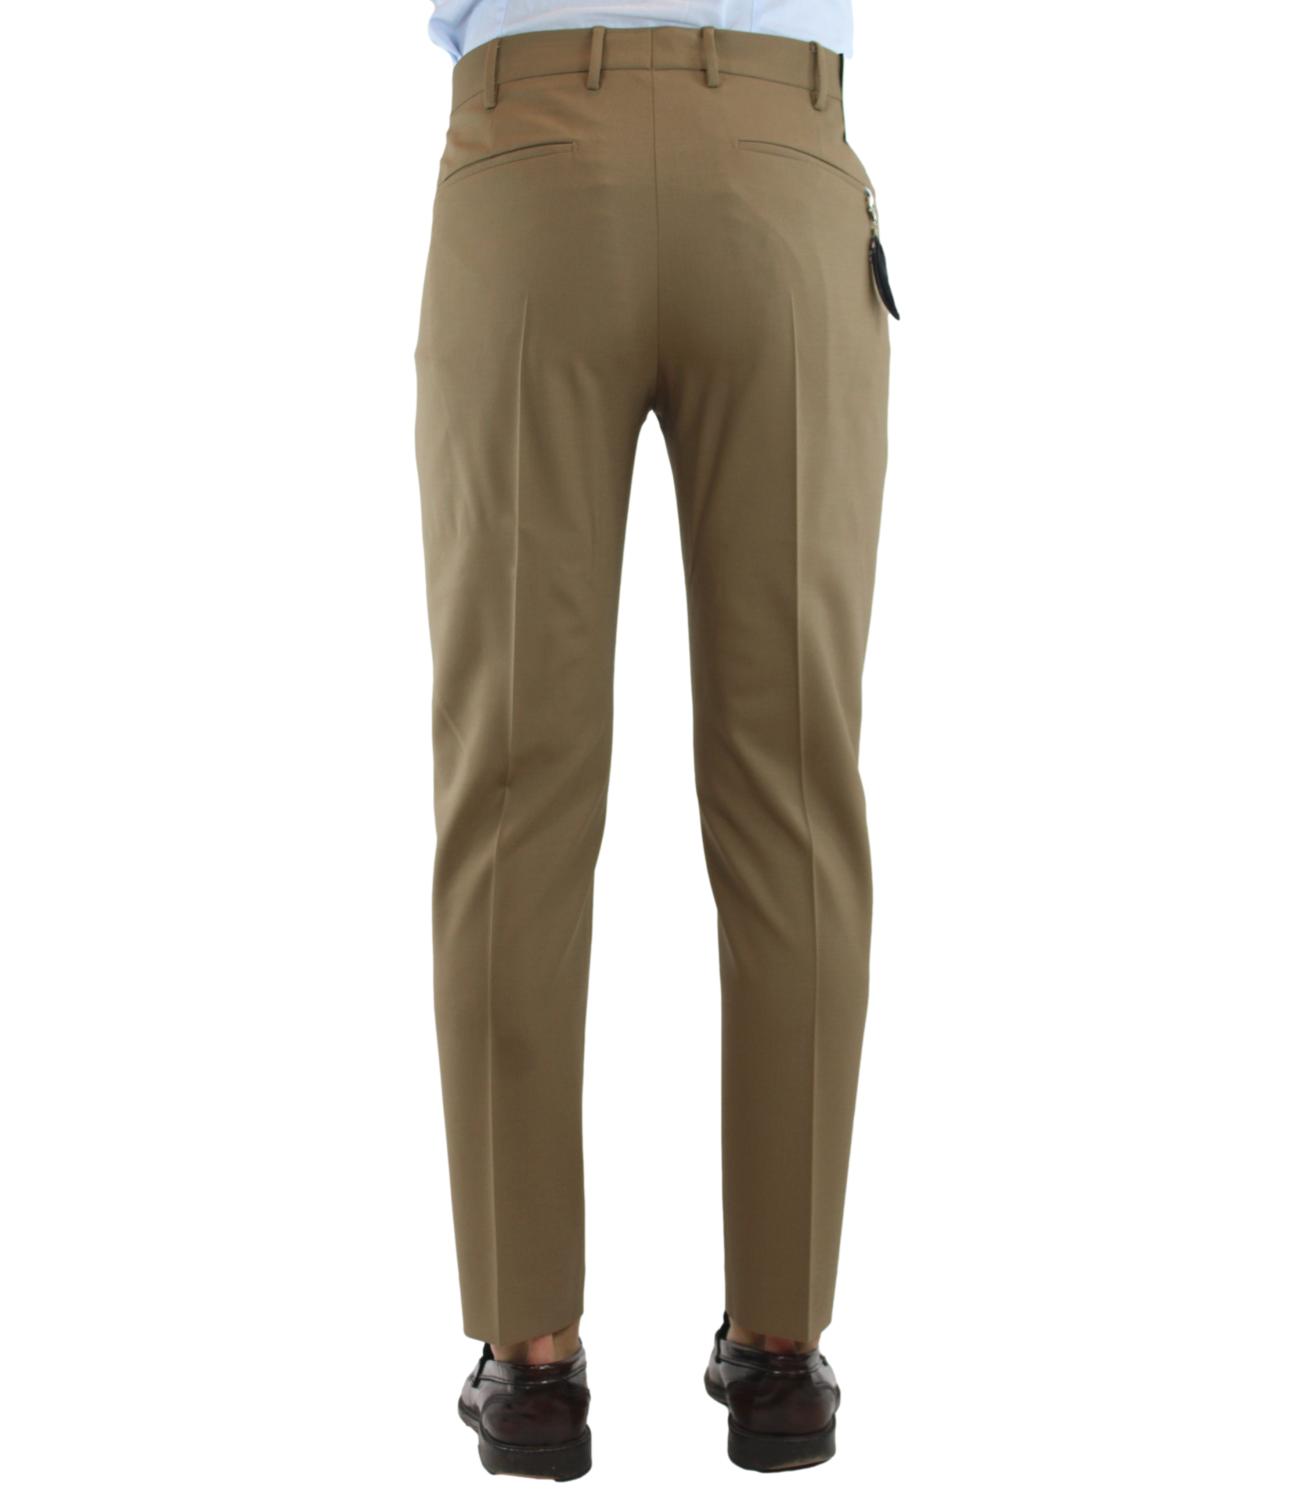 Pantalone PT Torino tabacco in lana vergine con zip L. 30